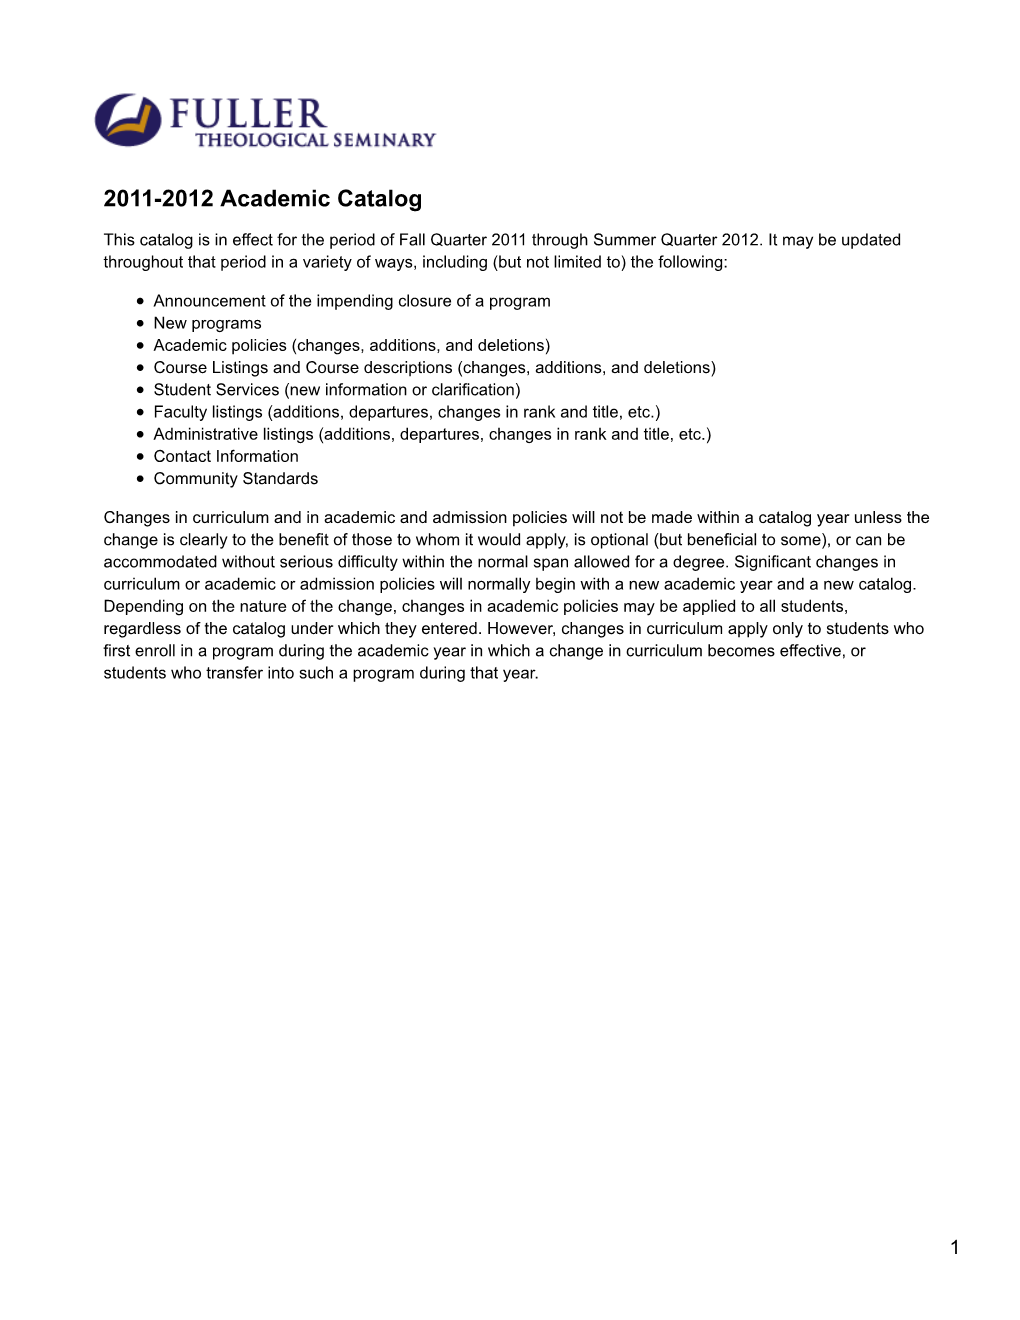 Online Catalog: Academic Year 2011-2012